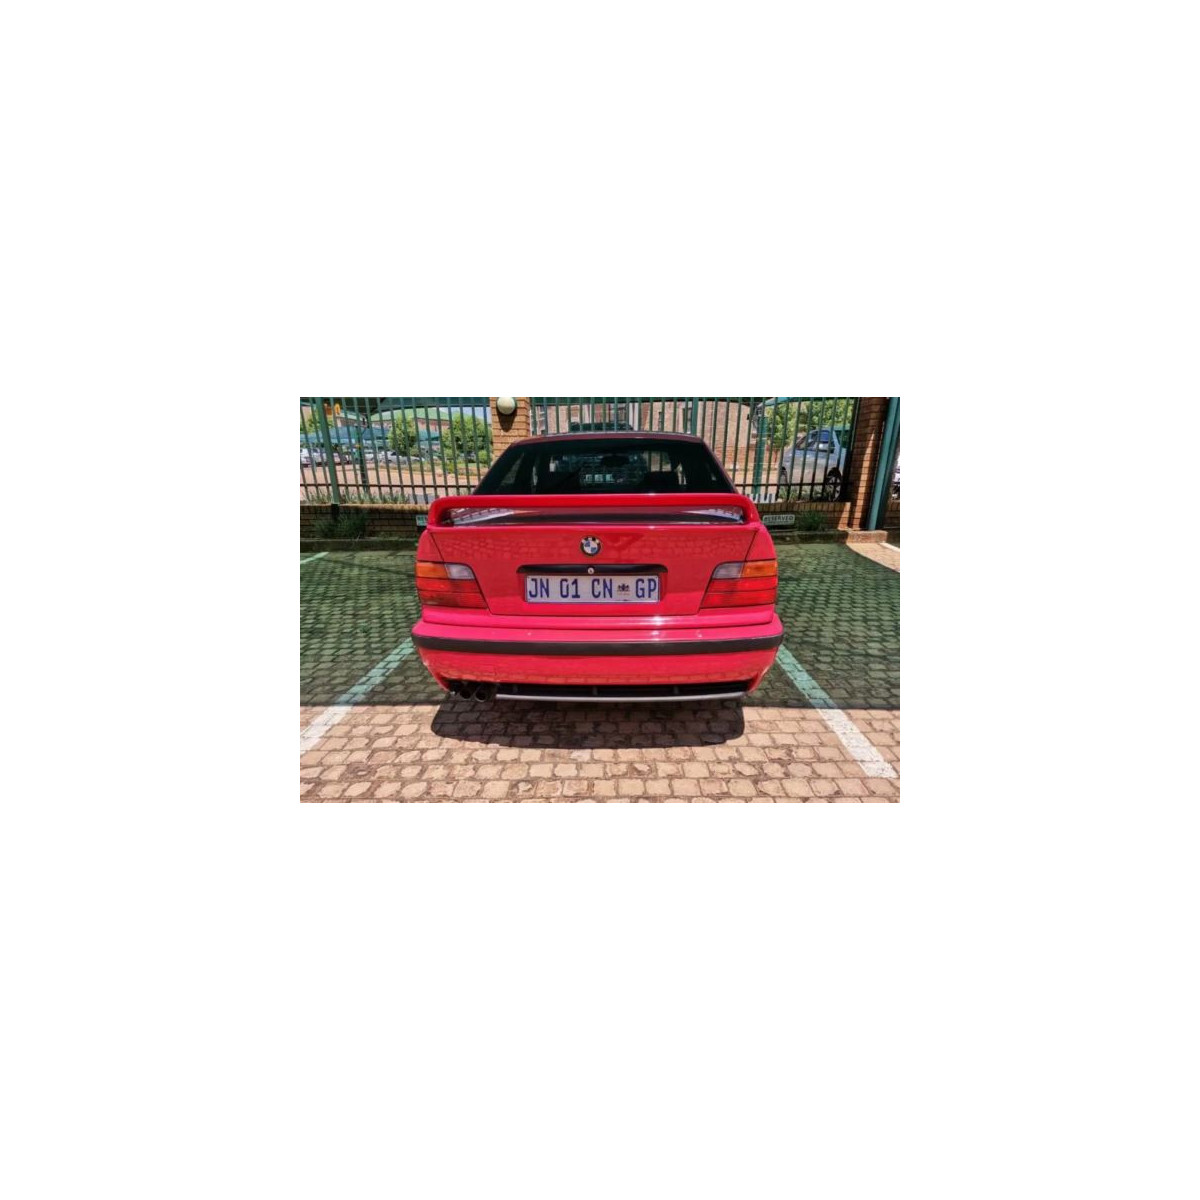 SPOILER NA KLAPĘ BMW E36 DUZY  ABS